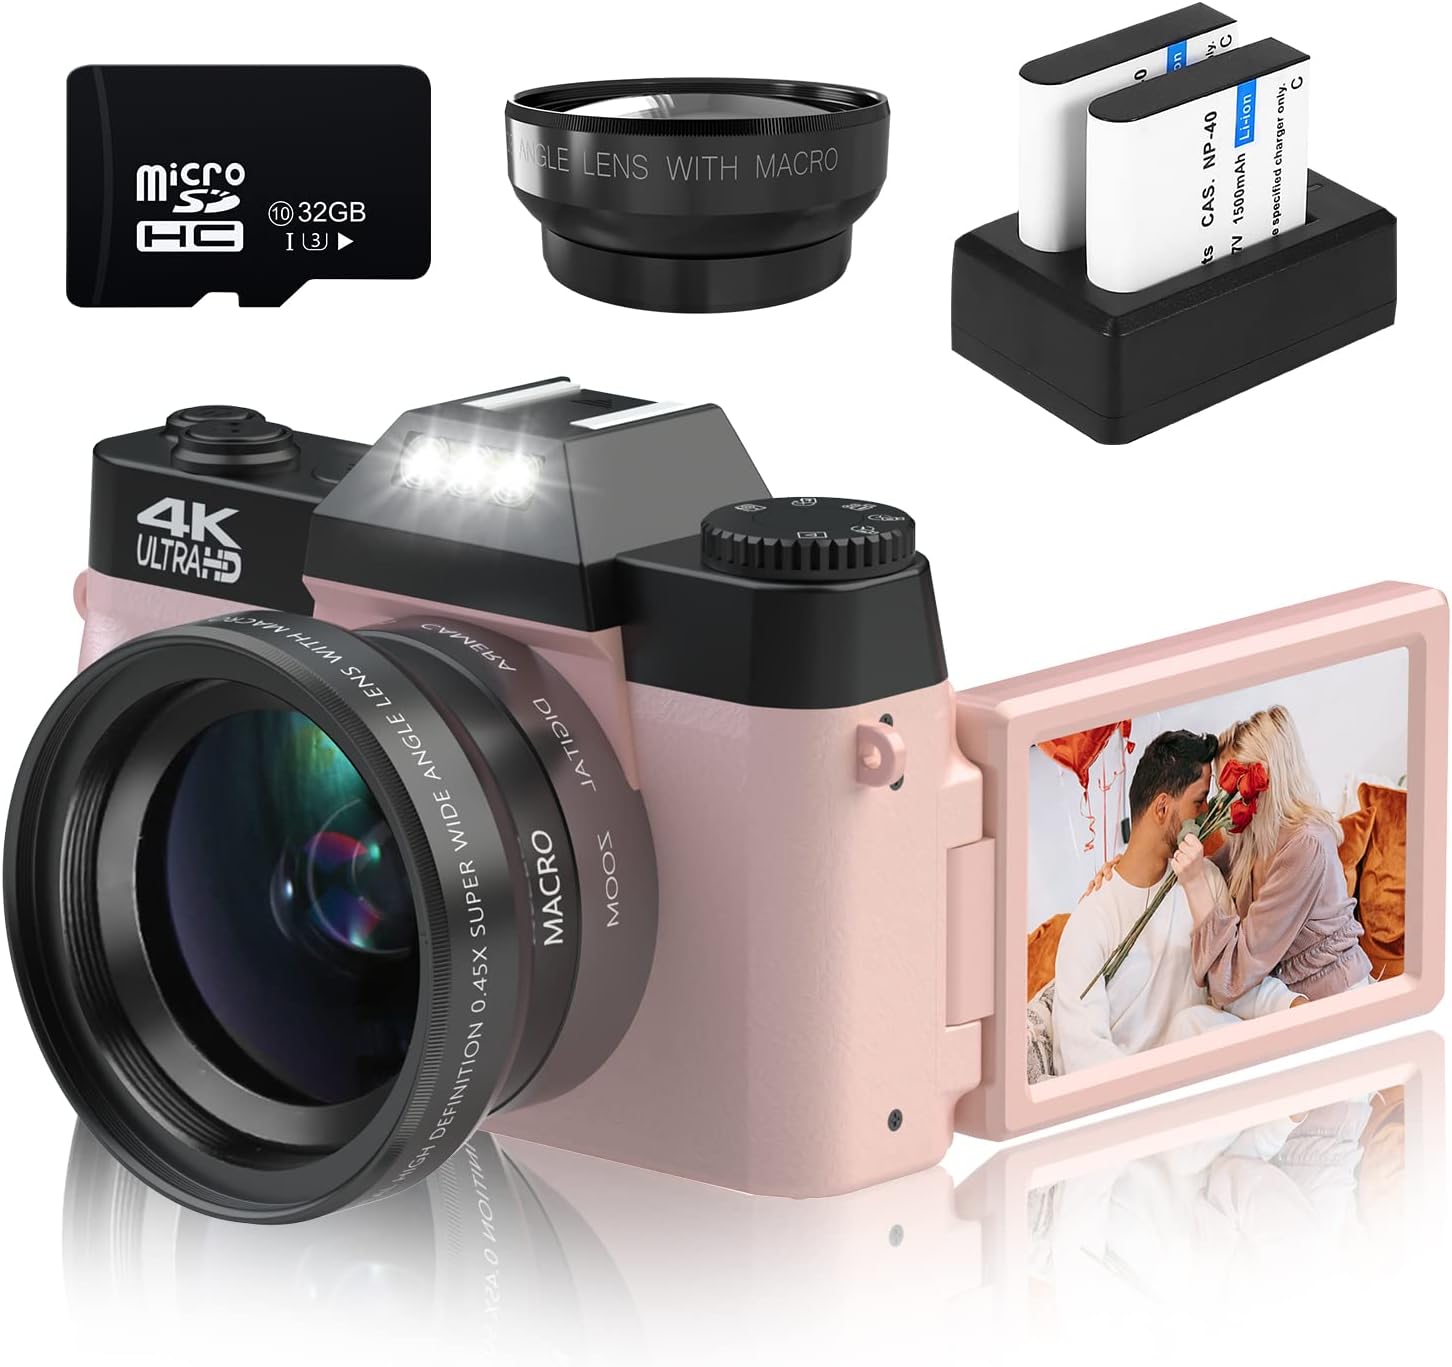 VETEK Digital Cameras Review: Affordable and Versatile Option for Vlogging and Photography